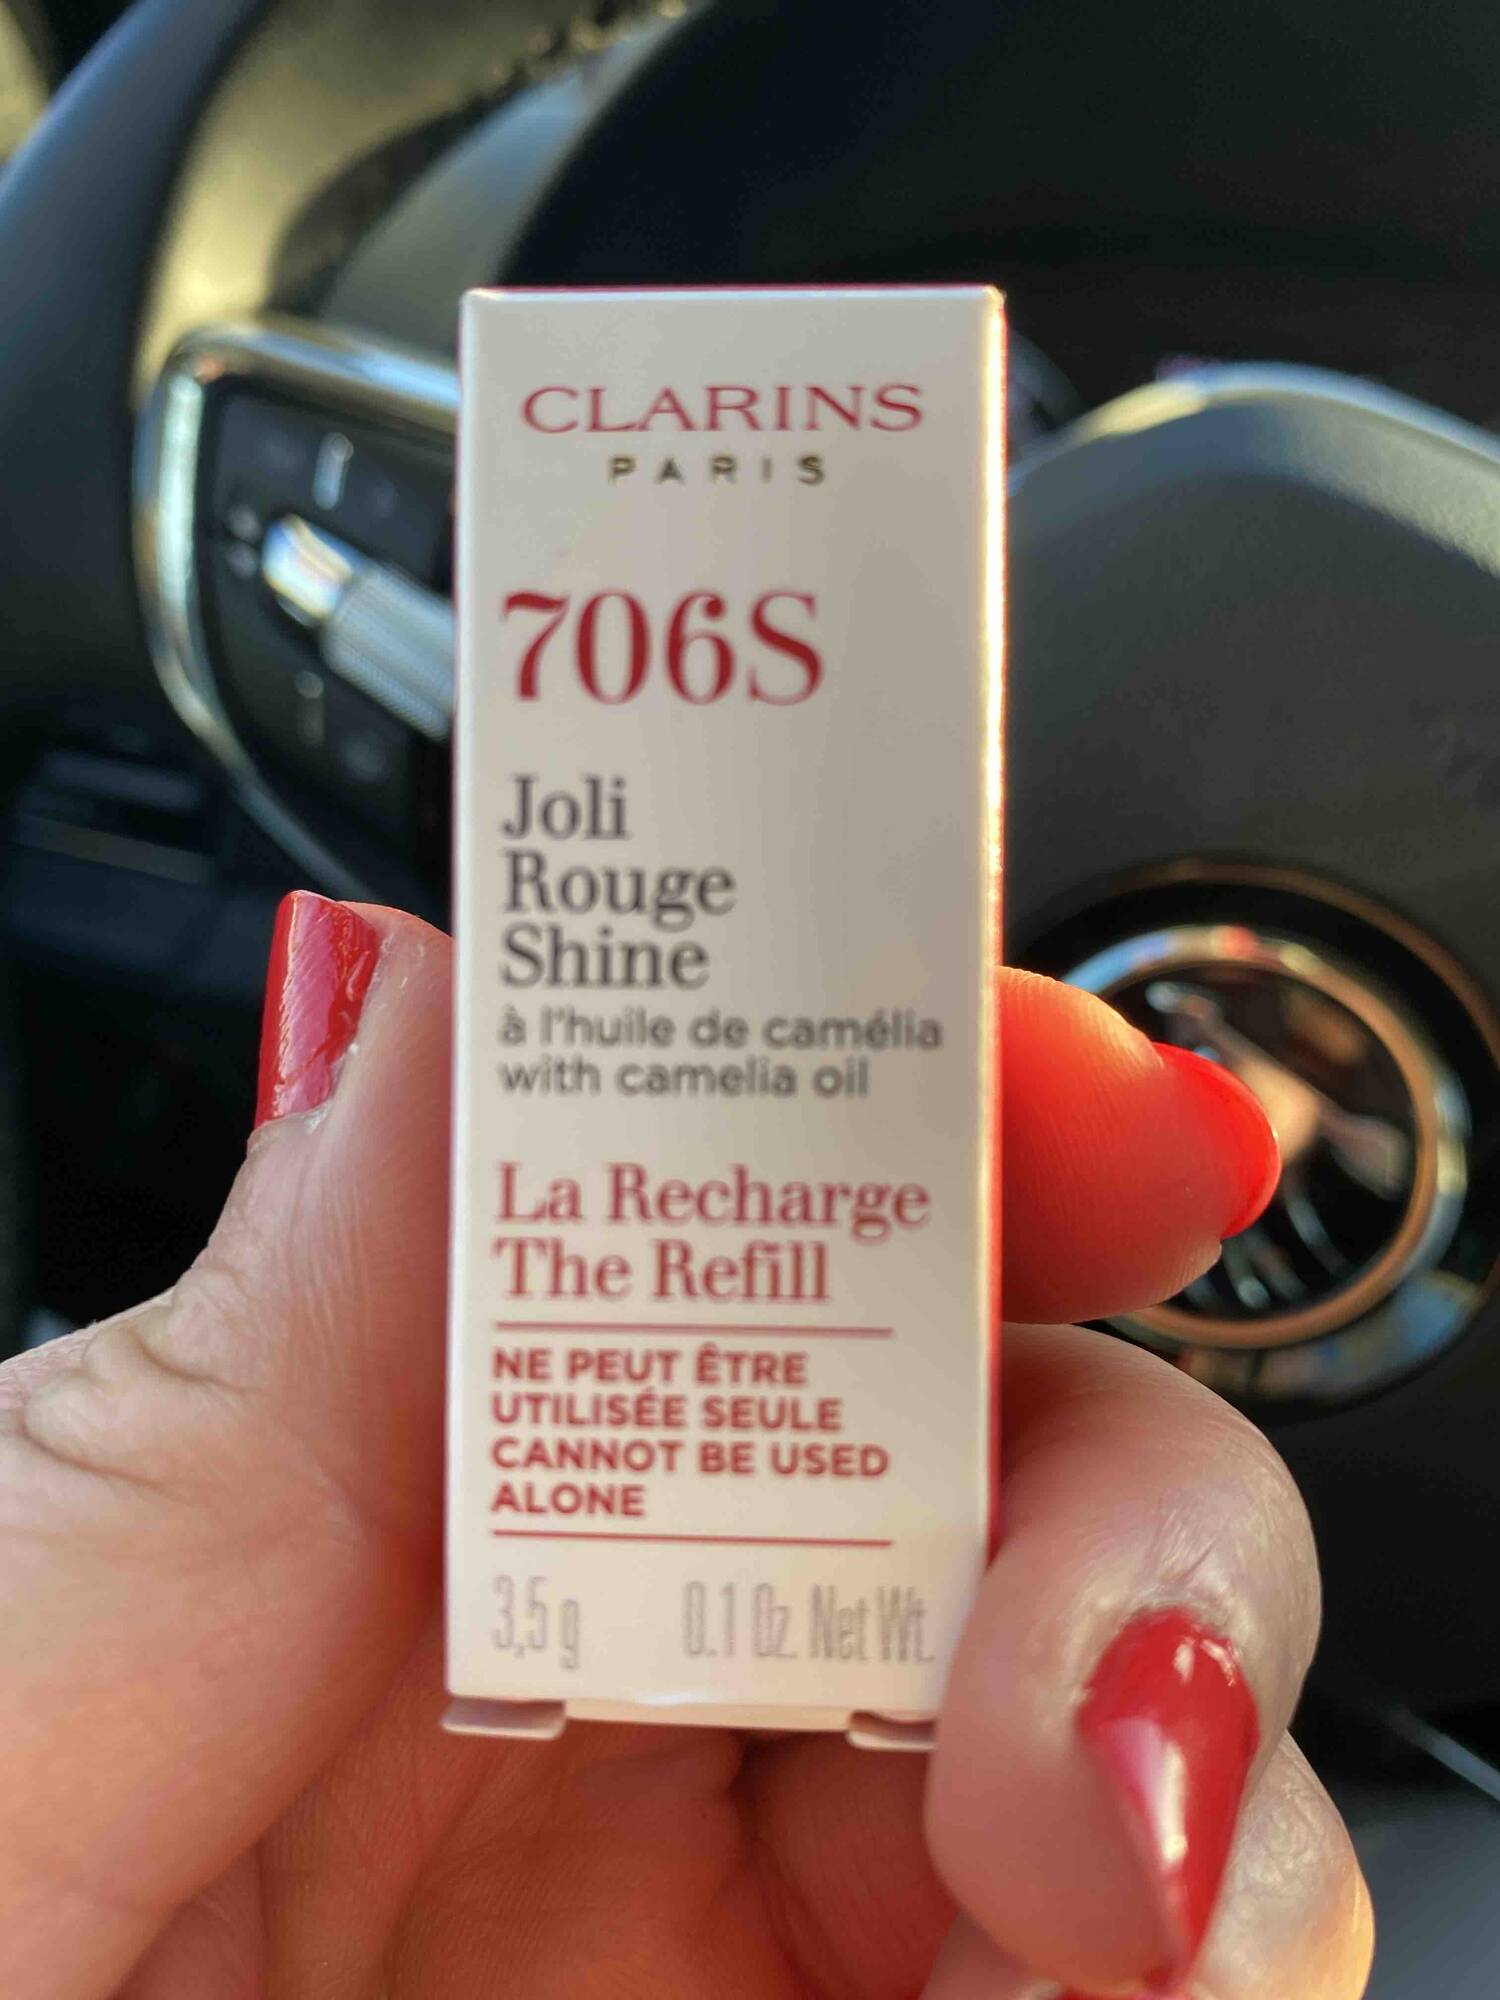 CLARINS - 706S - Jolie rouge shine 